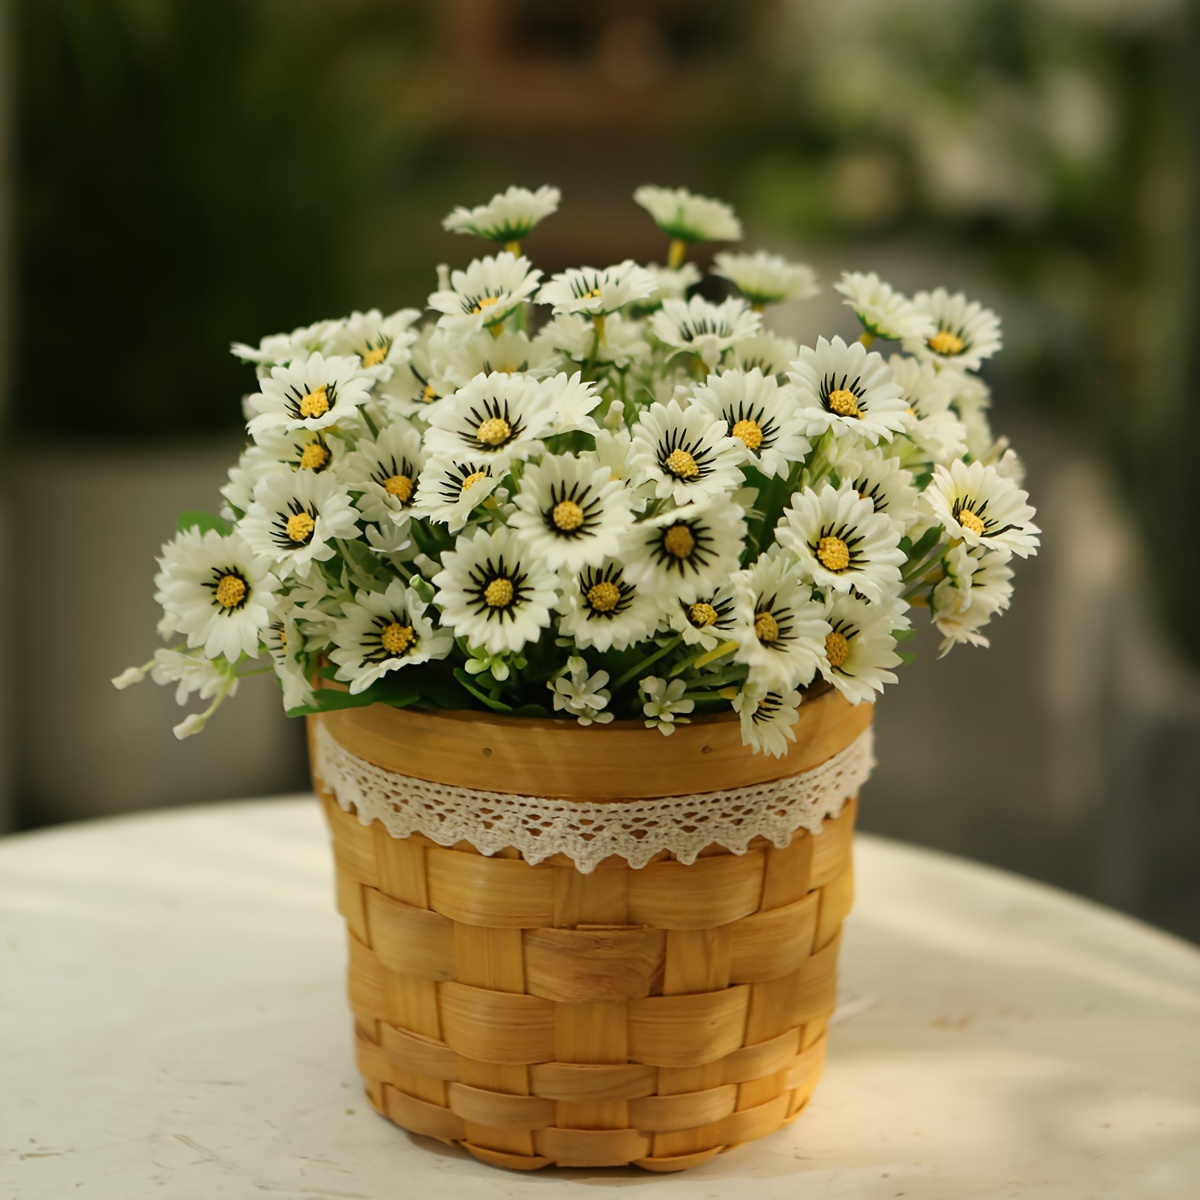 Flores secas TAODAN 90 tallos de flores secas naturales blancas brasileñas  pequeñas estrellas margaritas mini ramo de flores